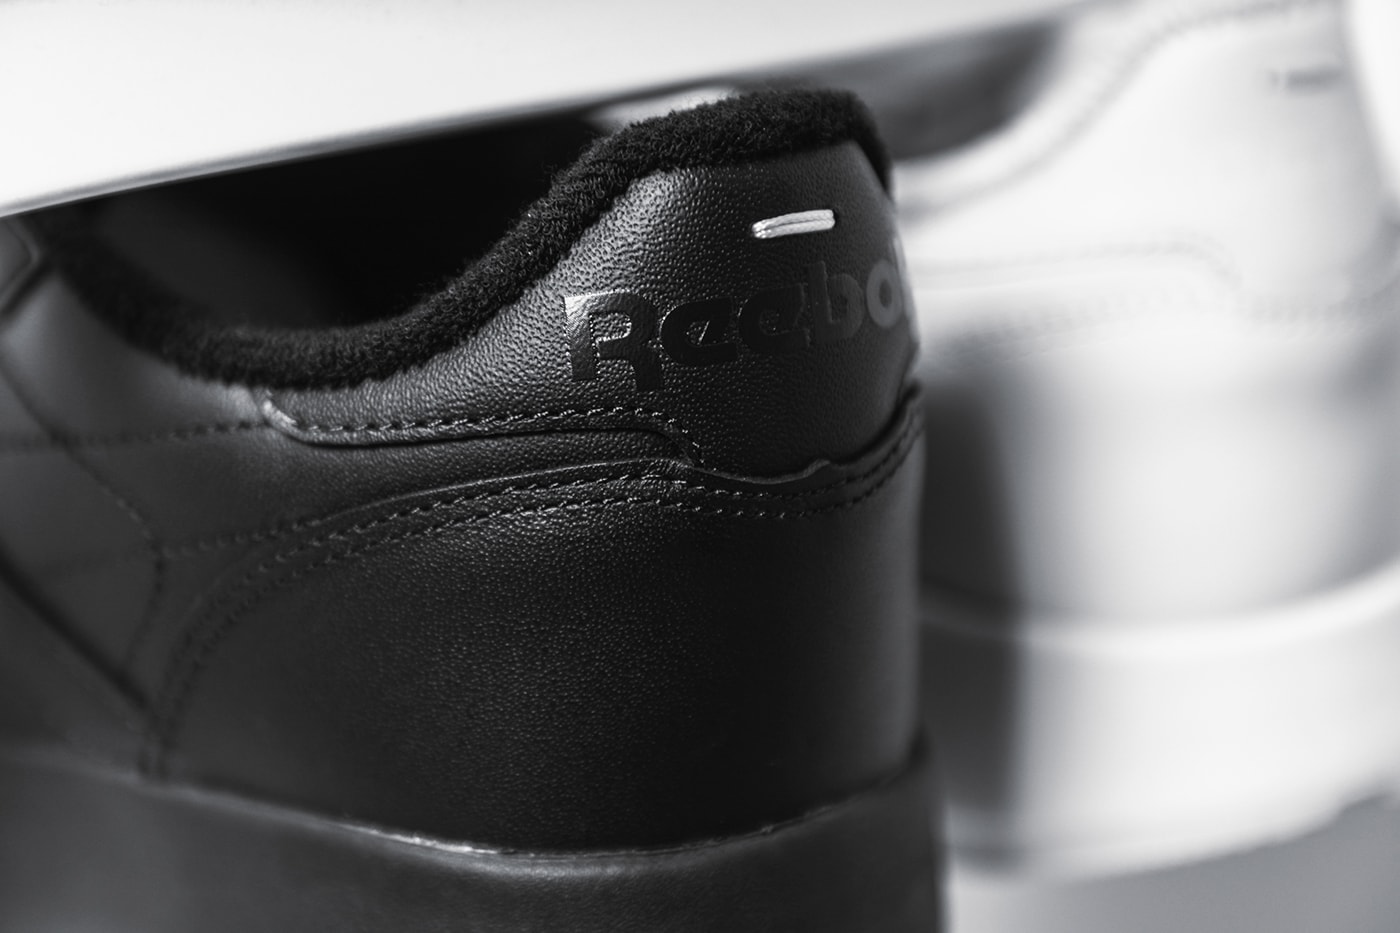 Maison Margiela Reebok Classic Leather Tabi Closer Look Release Info H04865 White Black Buy Price